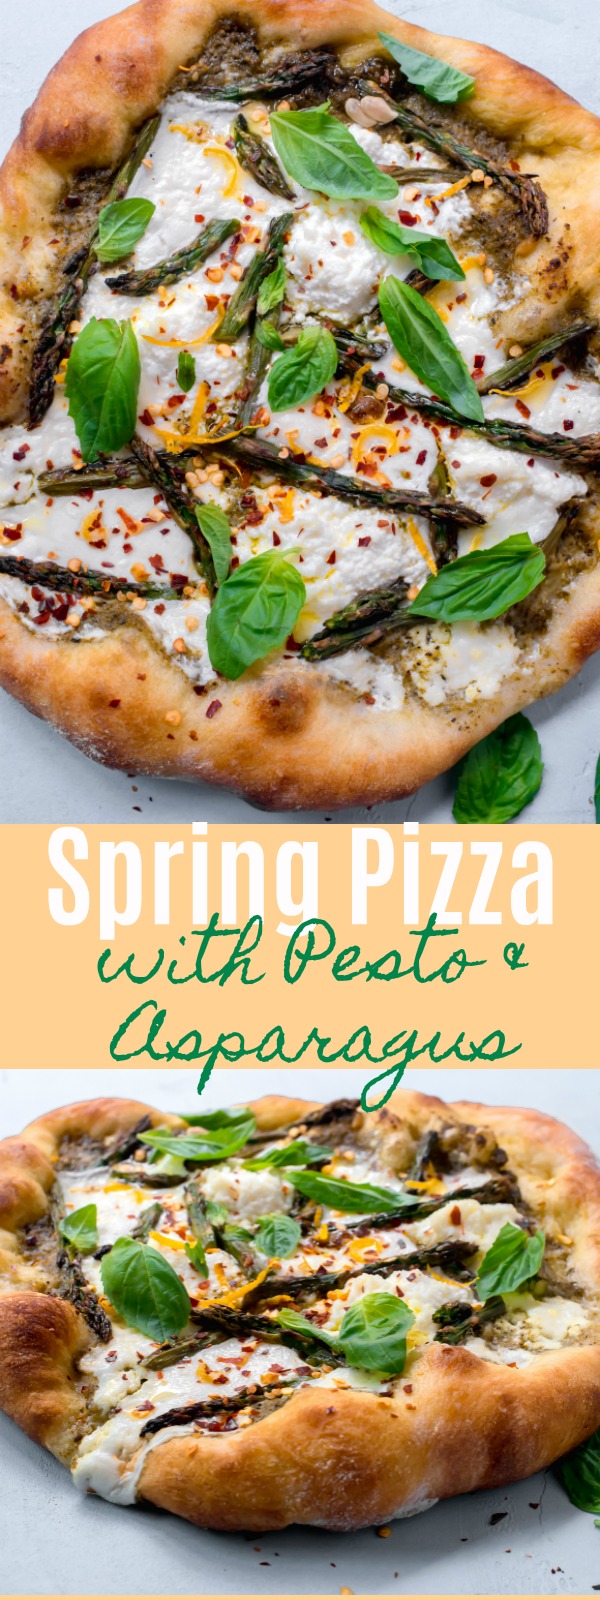 Spring Pizza with Pesto, Asparagus and Fresh Lemon Zest